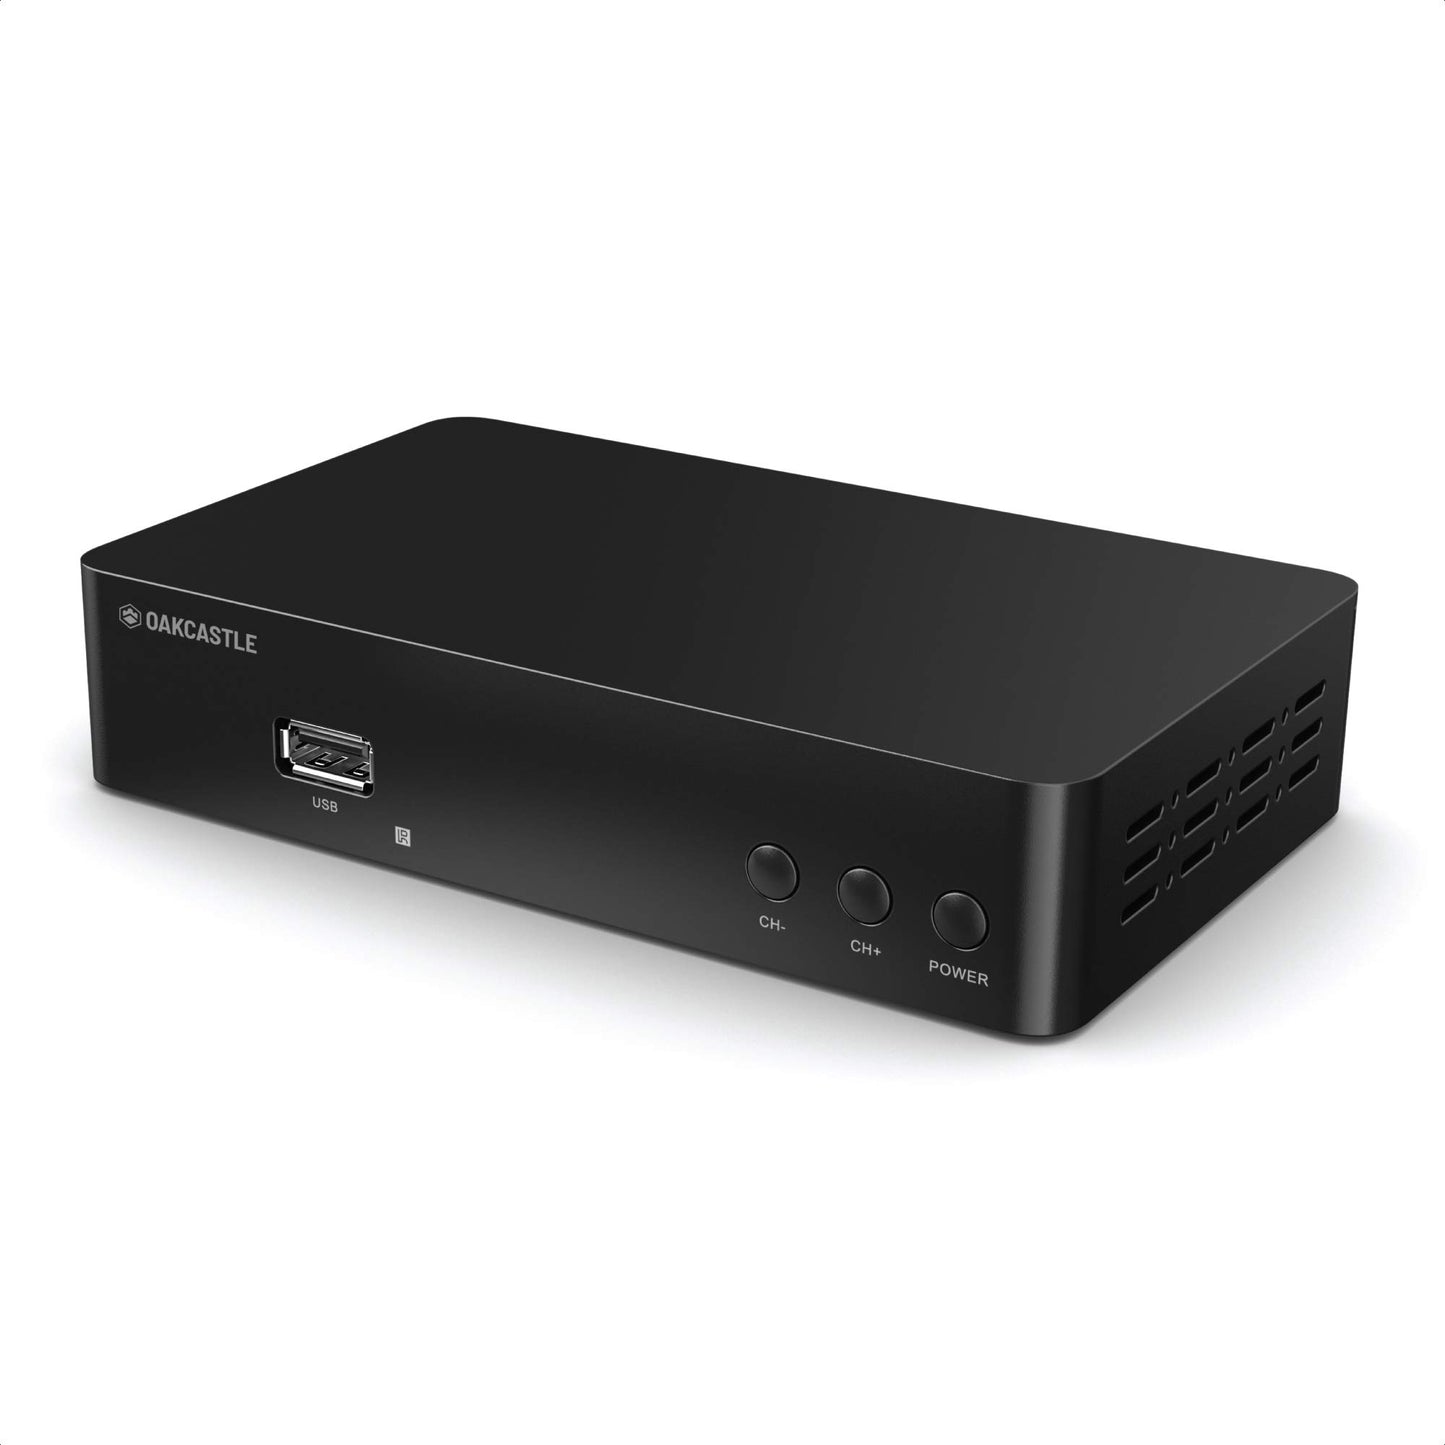 Oakcastle SB200 Freesat Box Recorder 150+ Freeview Channel USB Recorder Function